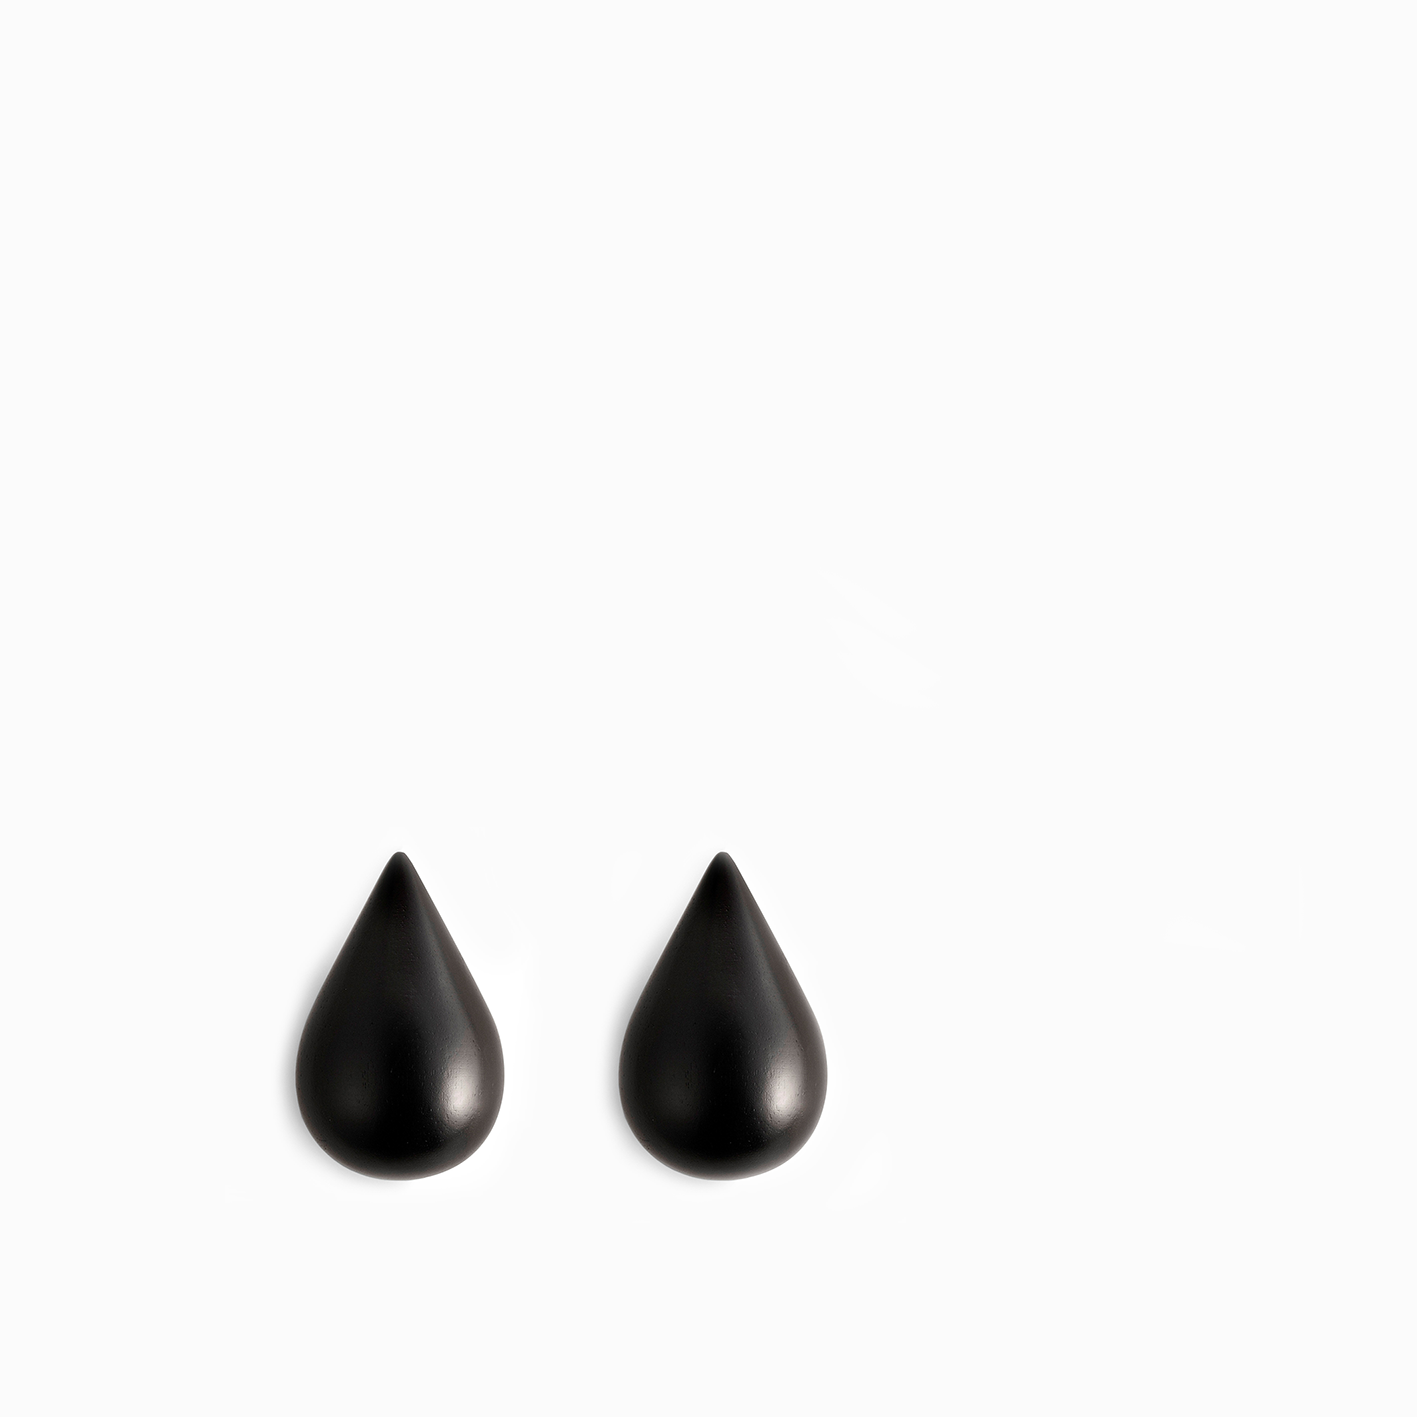 Normann Copenhagen Dropit Hooks Black (2 sizes)